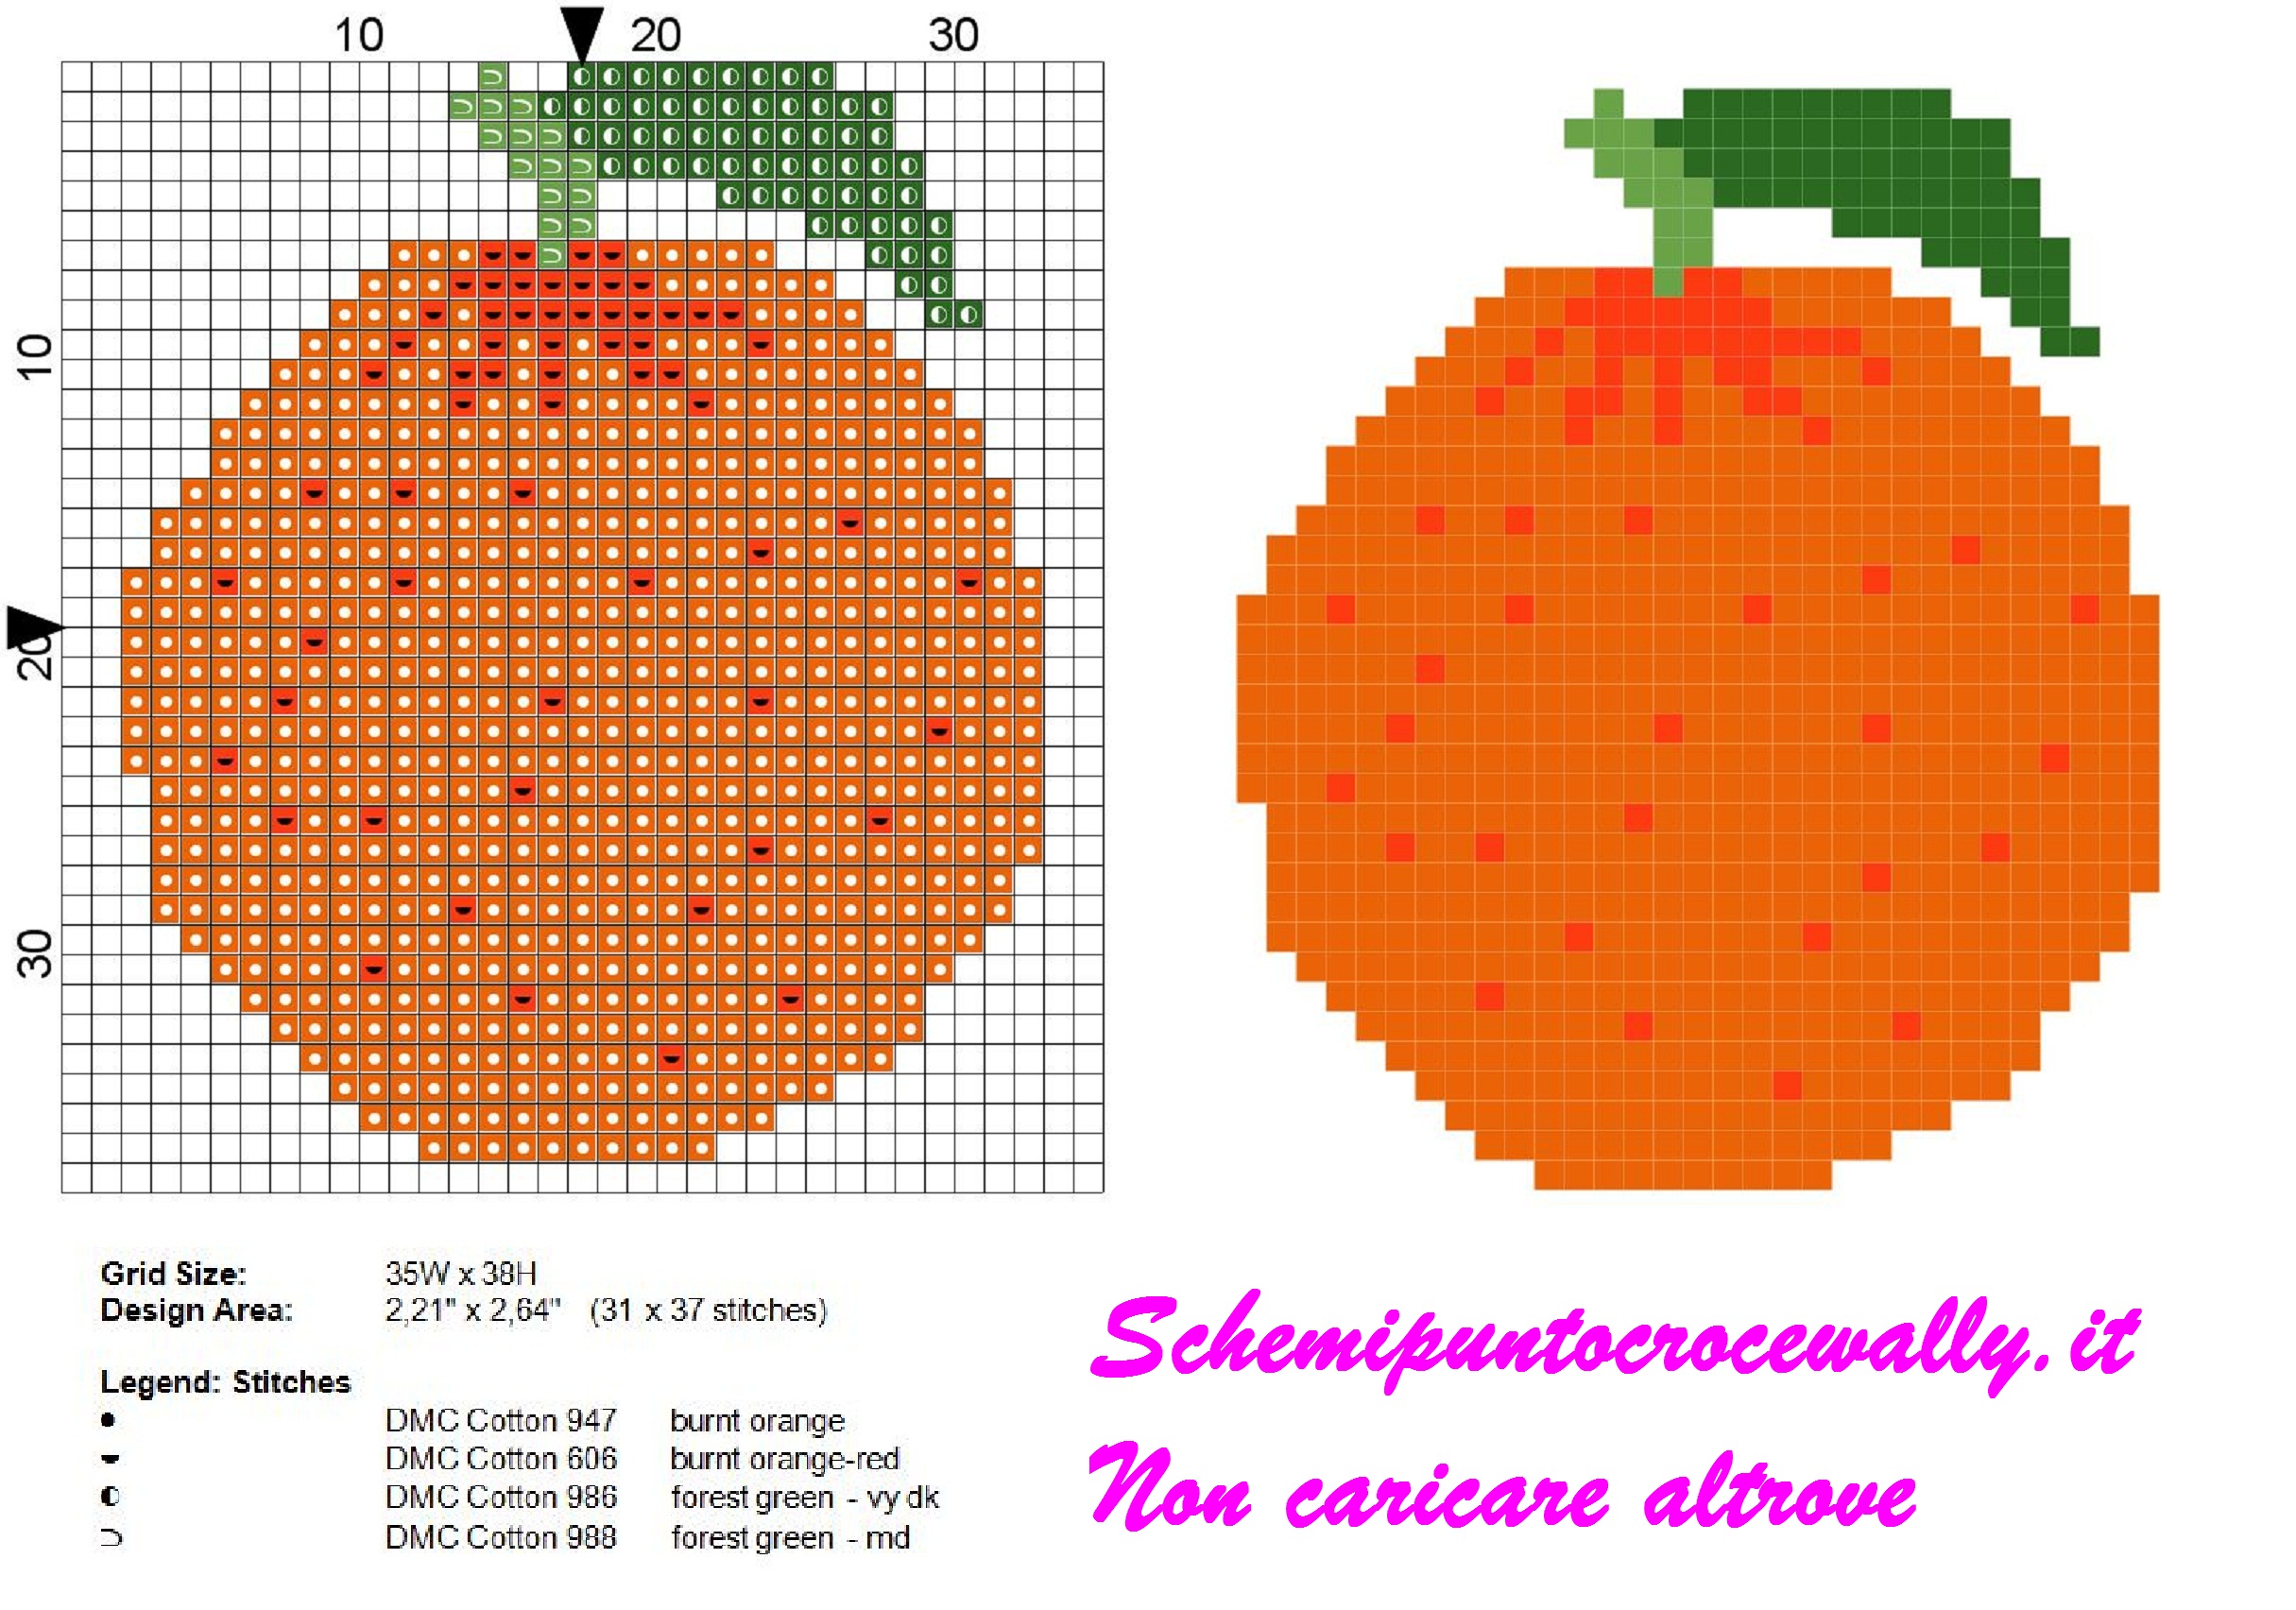 Frutta Arancia schema punto croce gratis